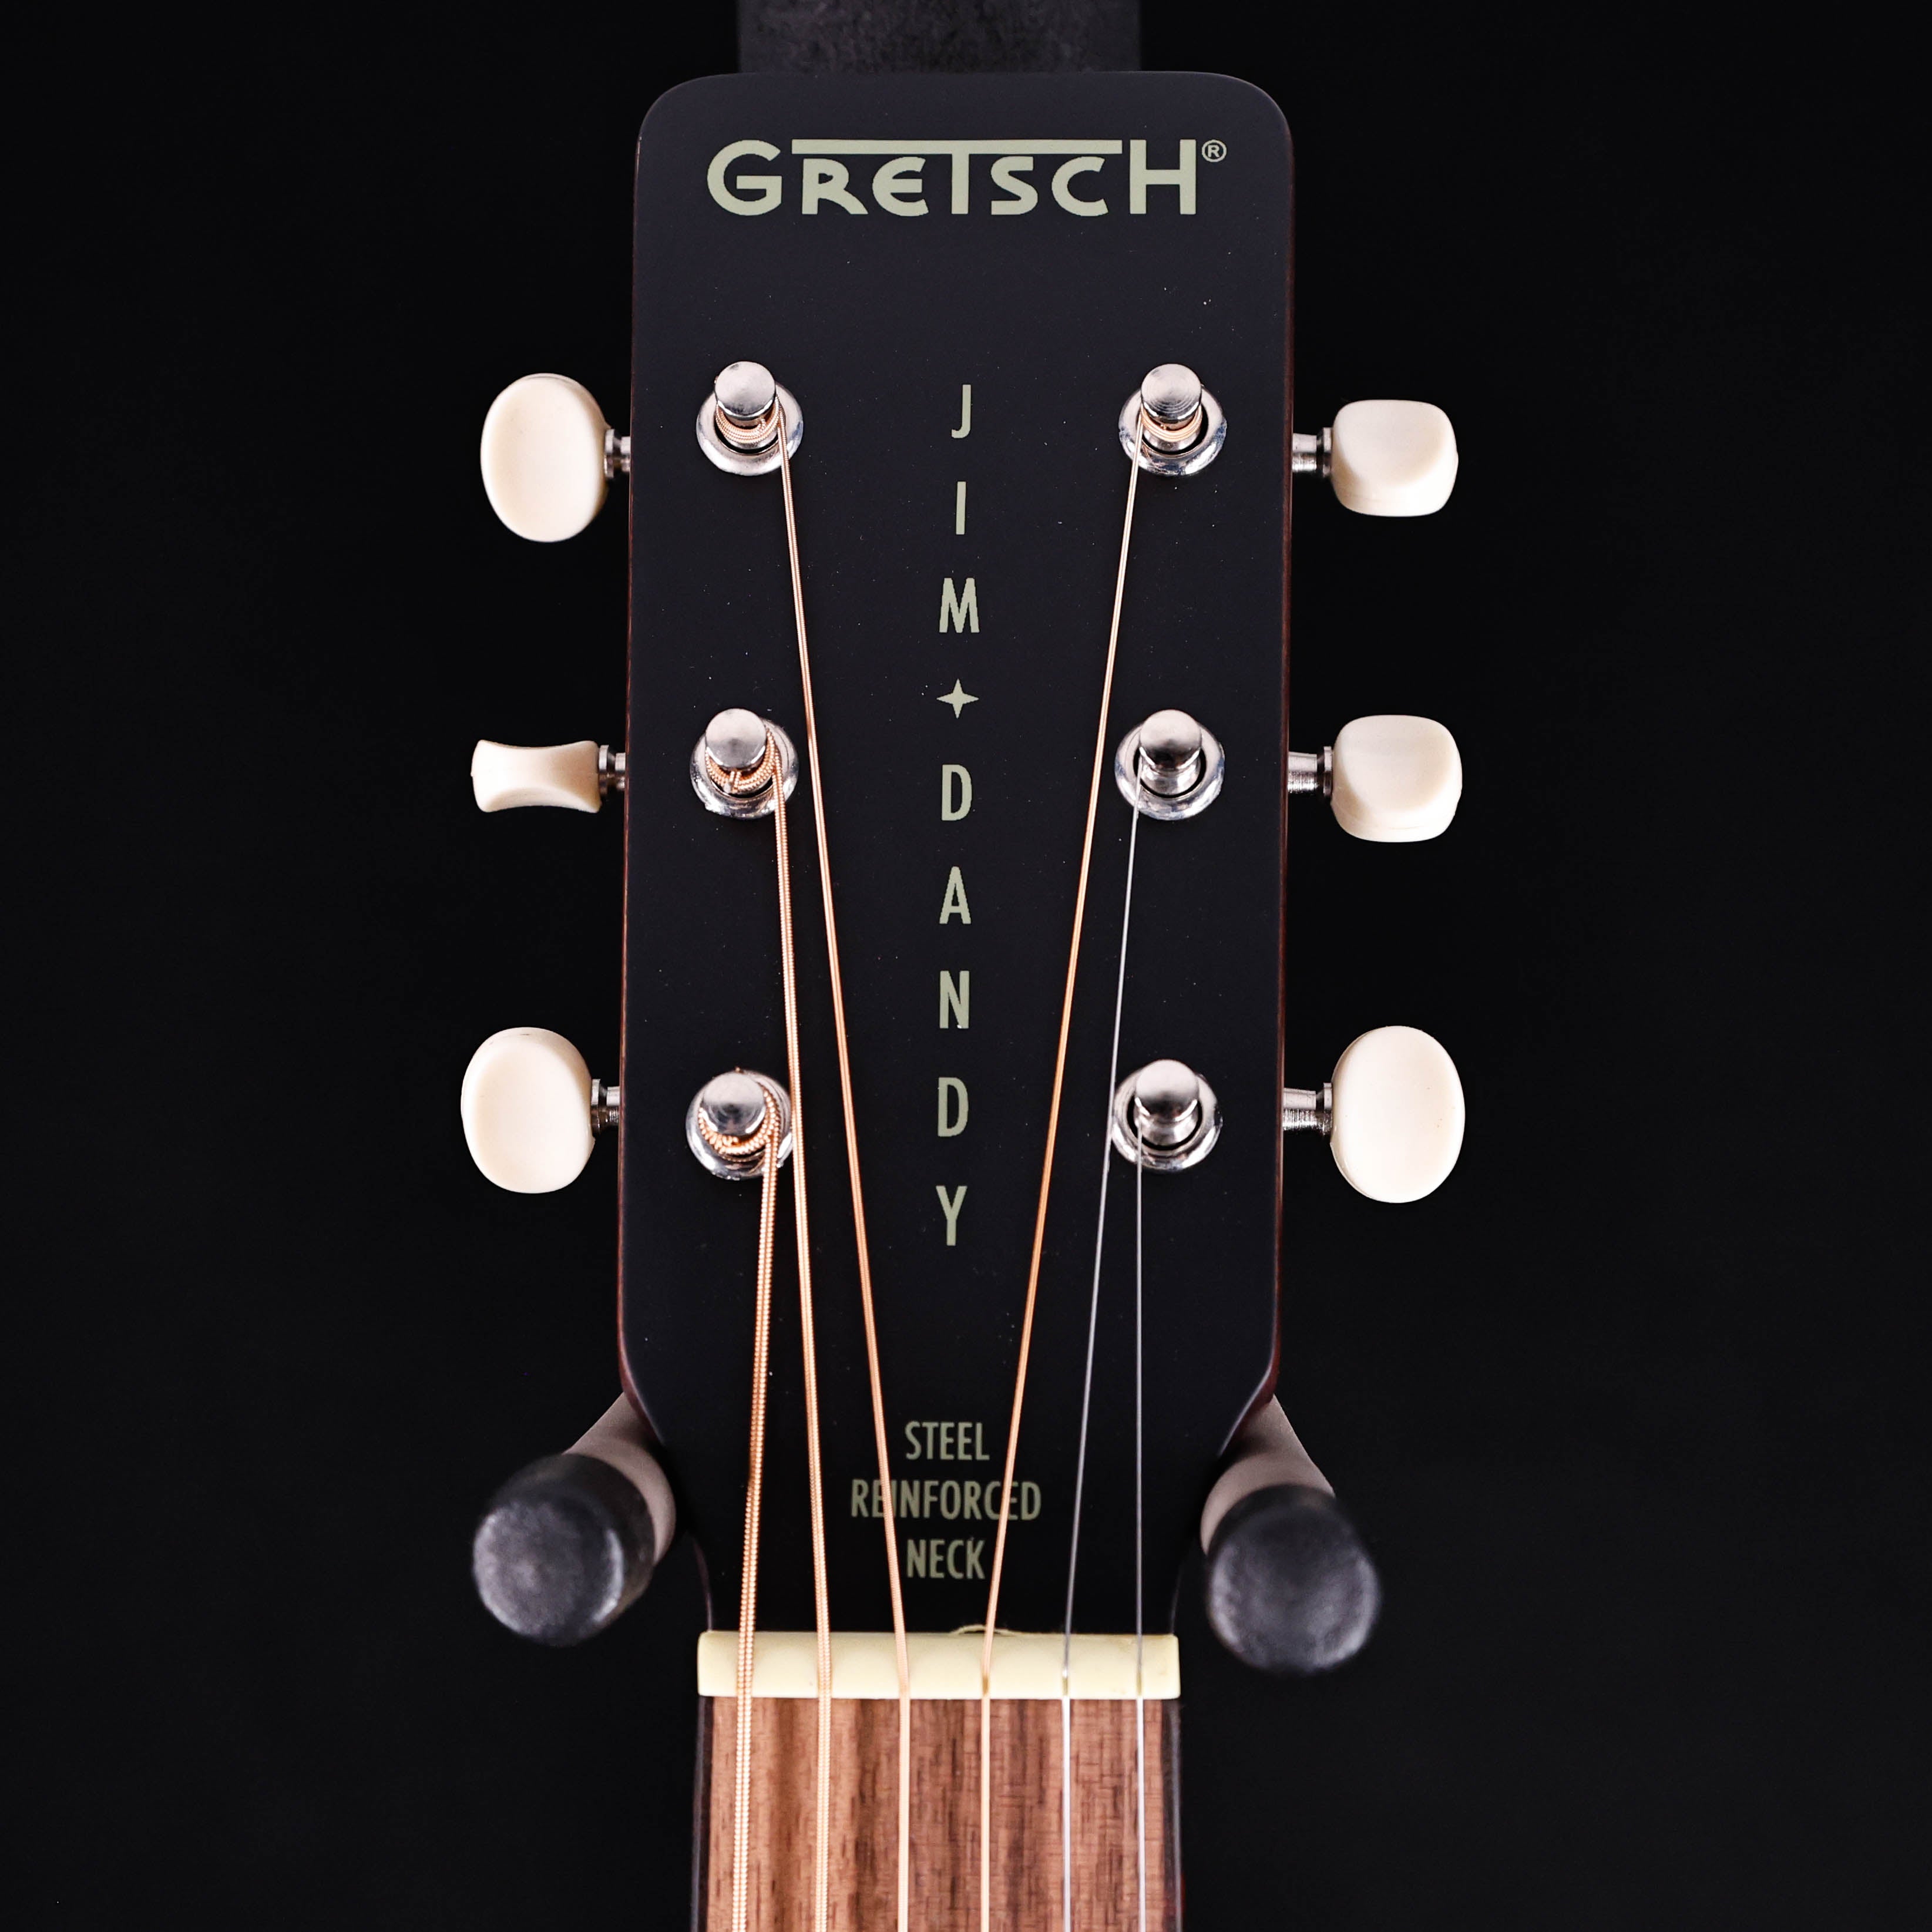 Gretsch Jim Dandy Deltoluxe Dreadnought Acoustic-Electric, Black